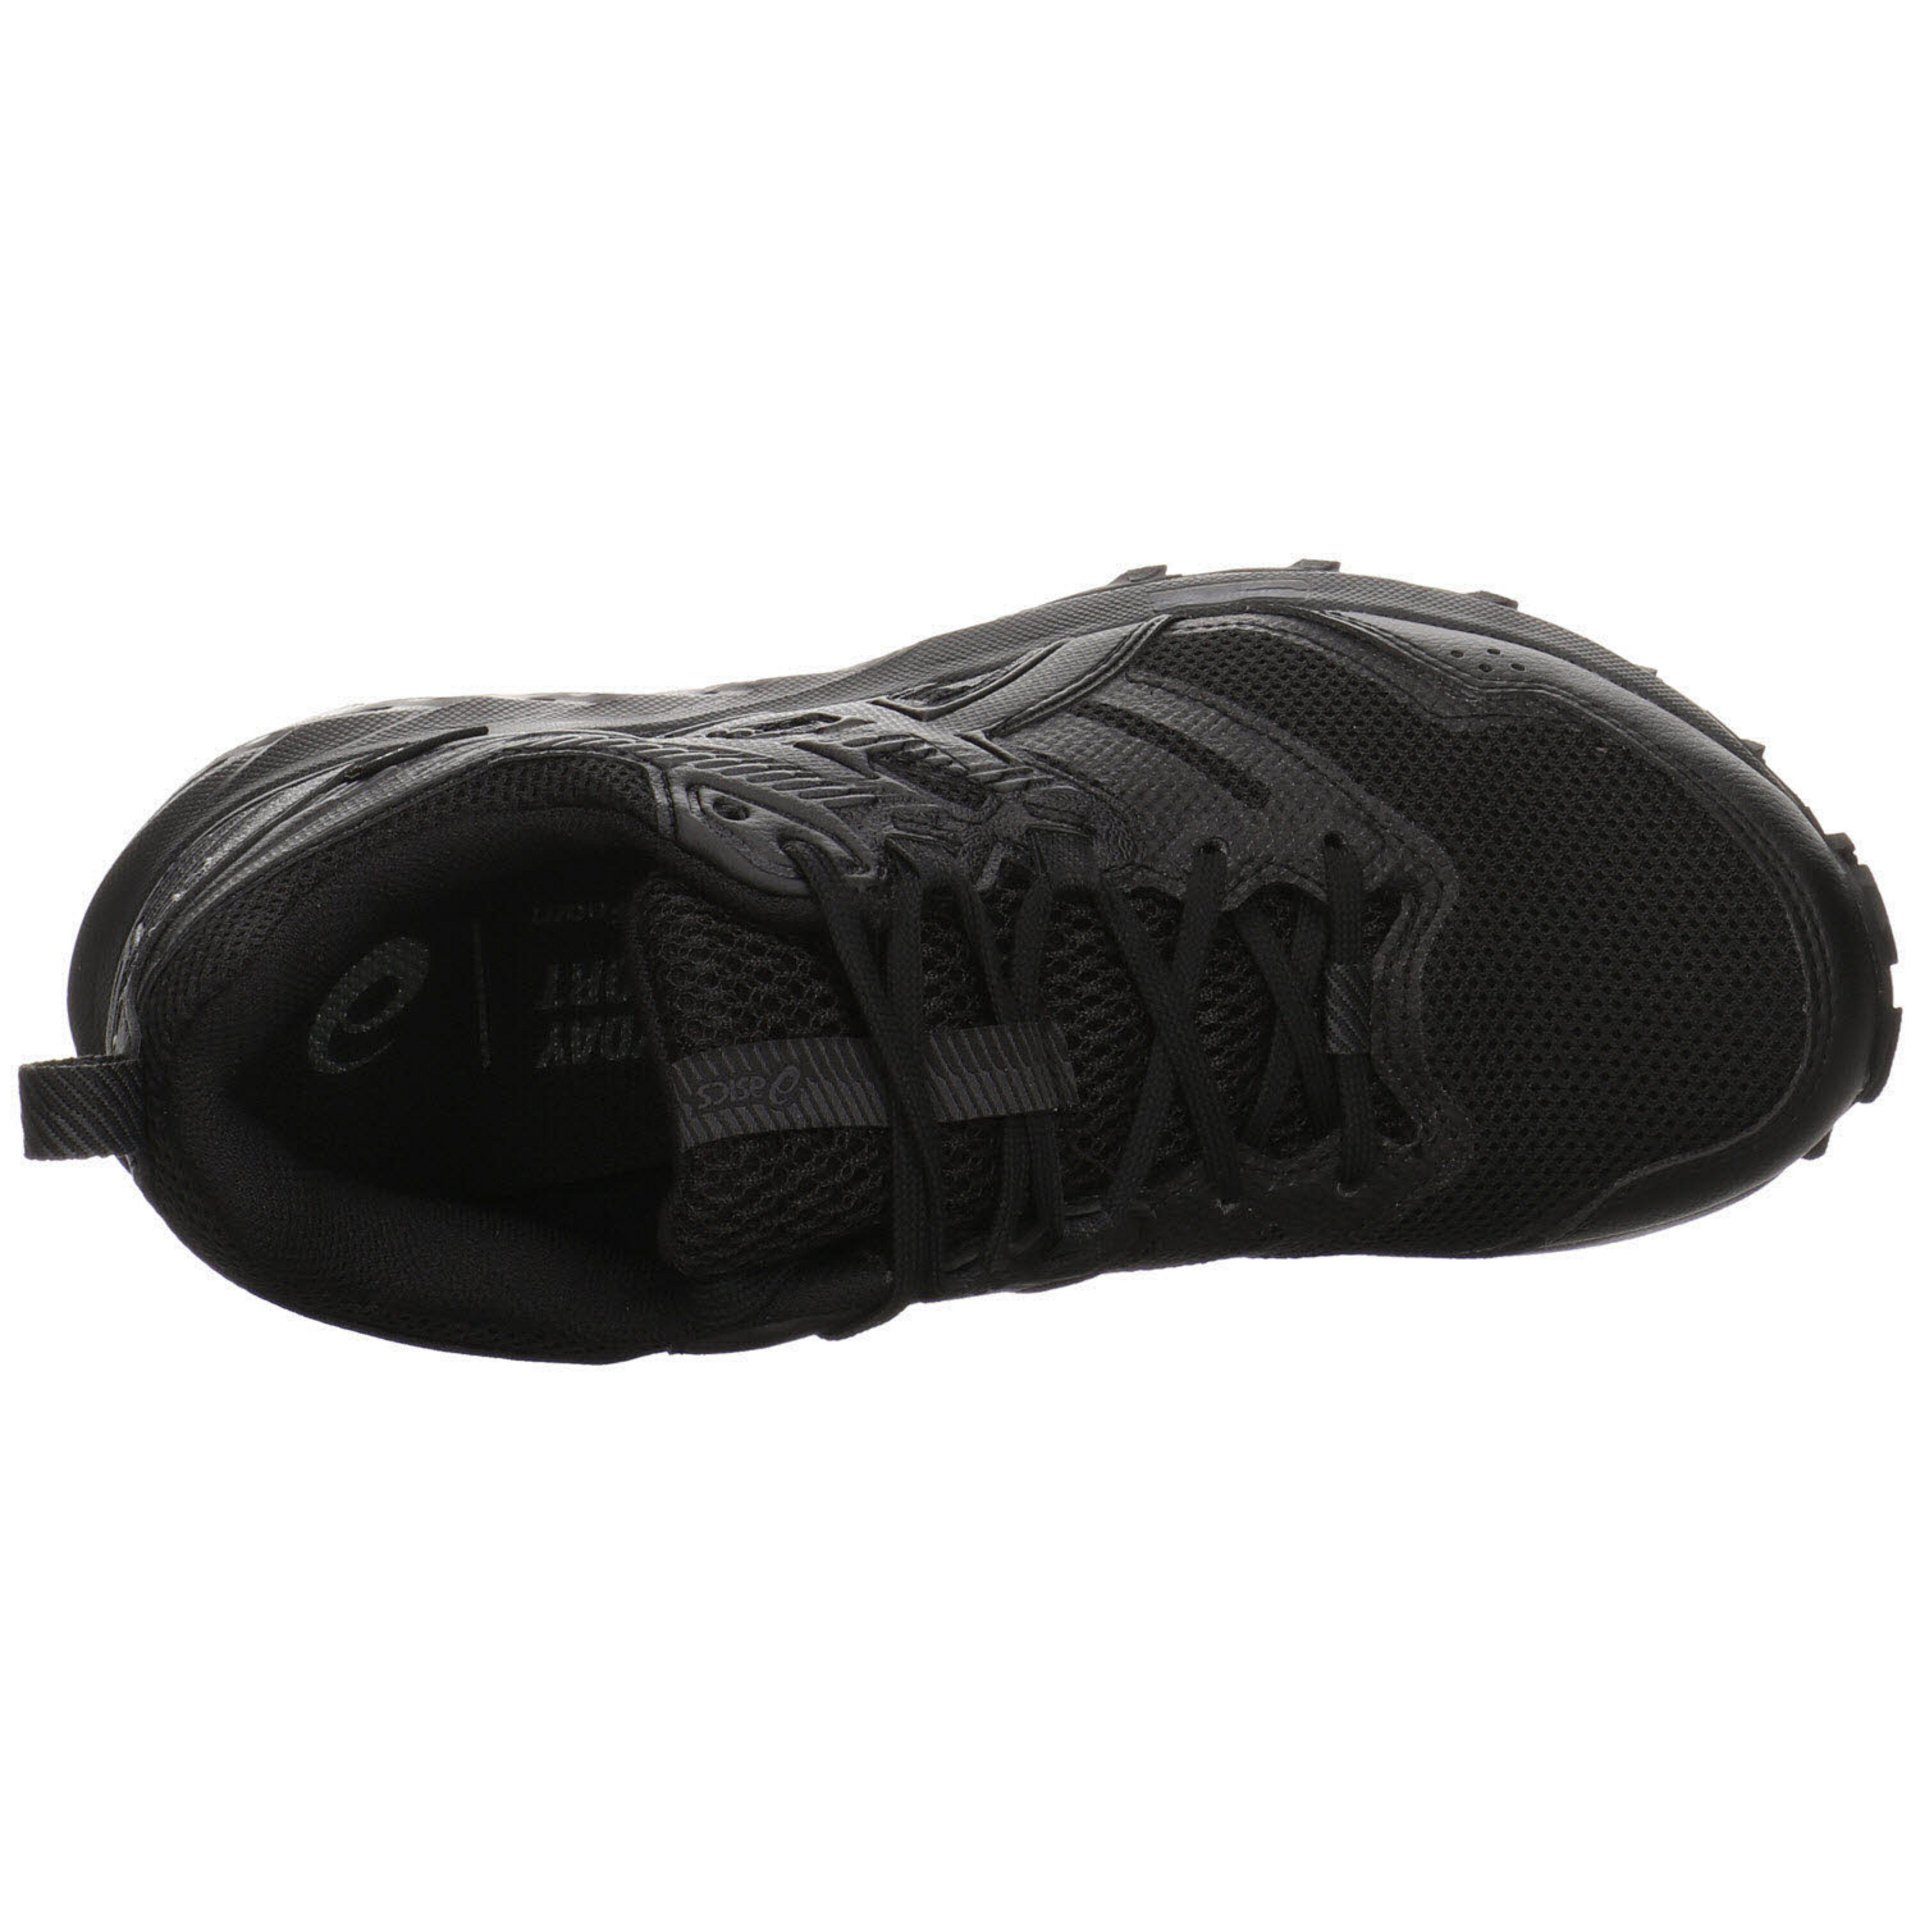 Asics Damen Schuhe Outdoor Outdoorschuh Synthetikkombination schwarz dunkel